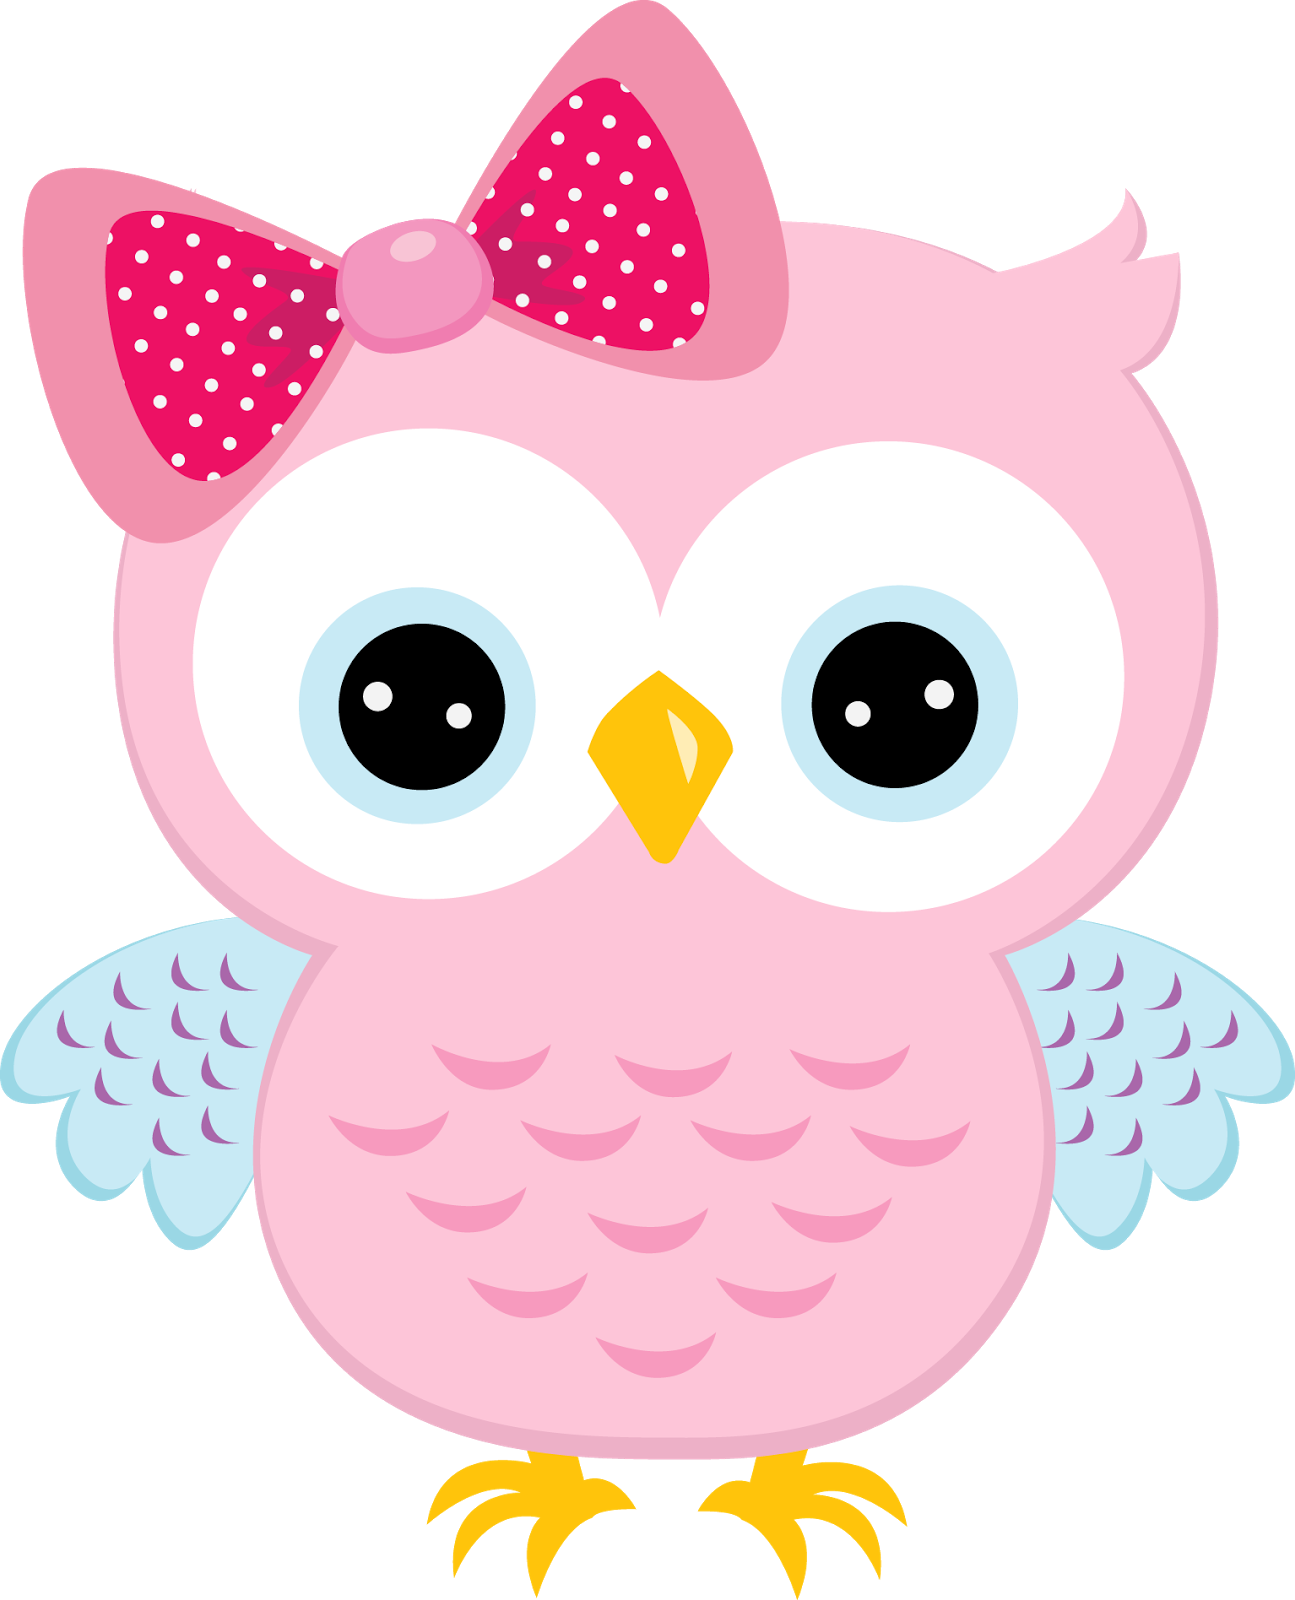 Owls clipart pink. Ibd hgtavme png piksel